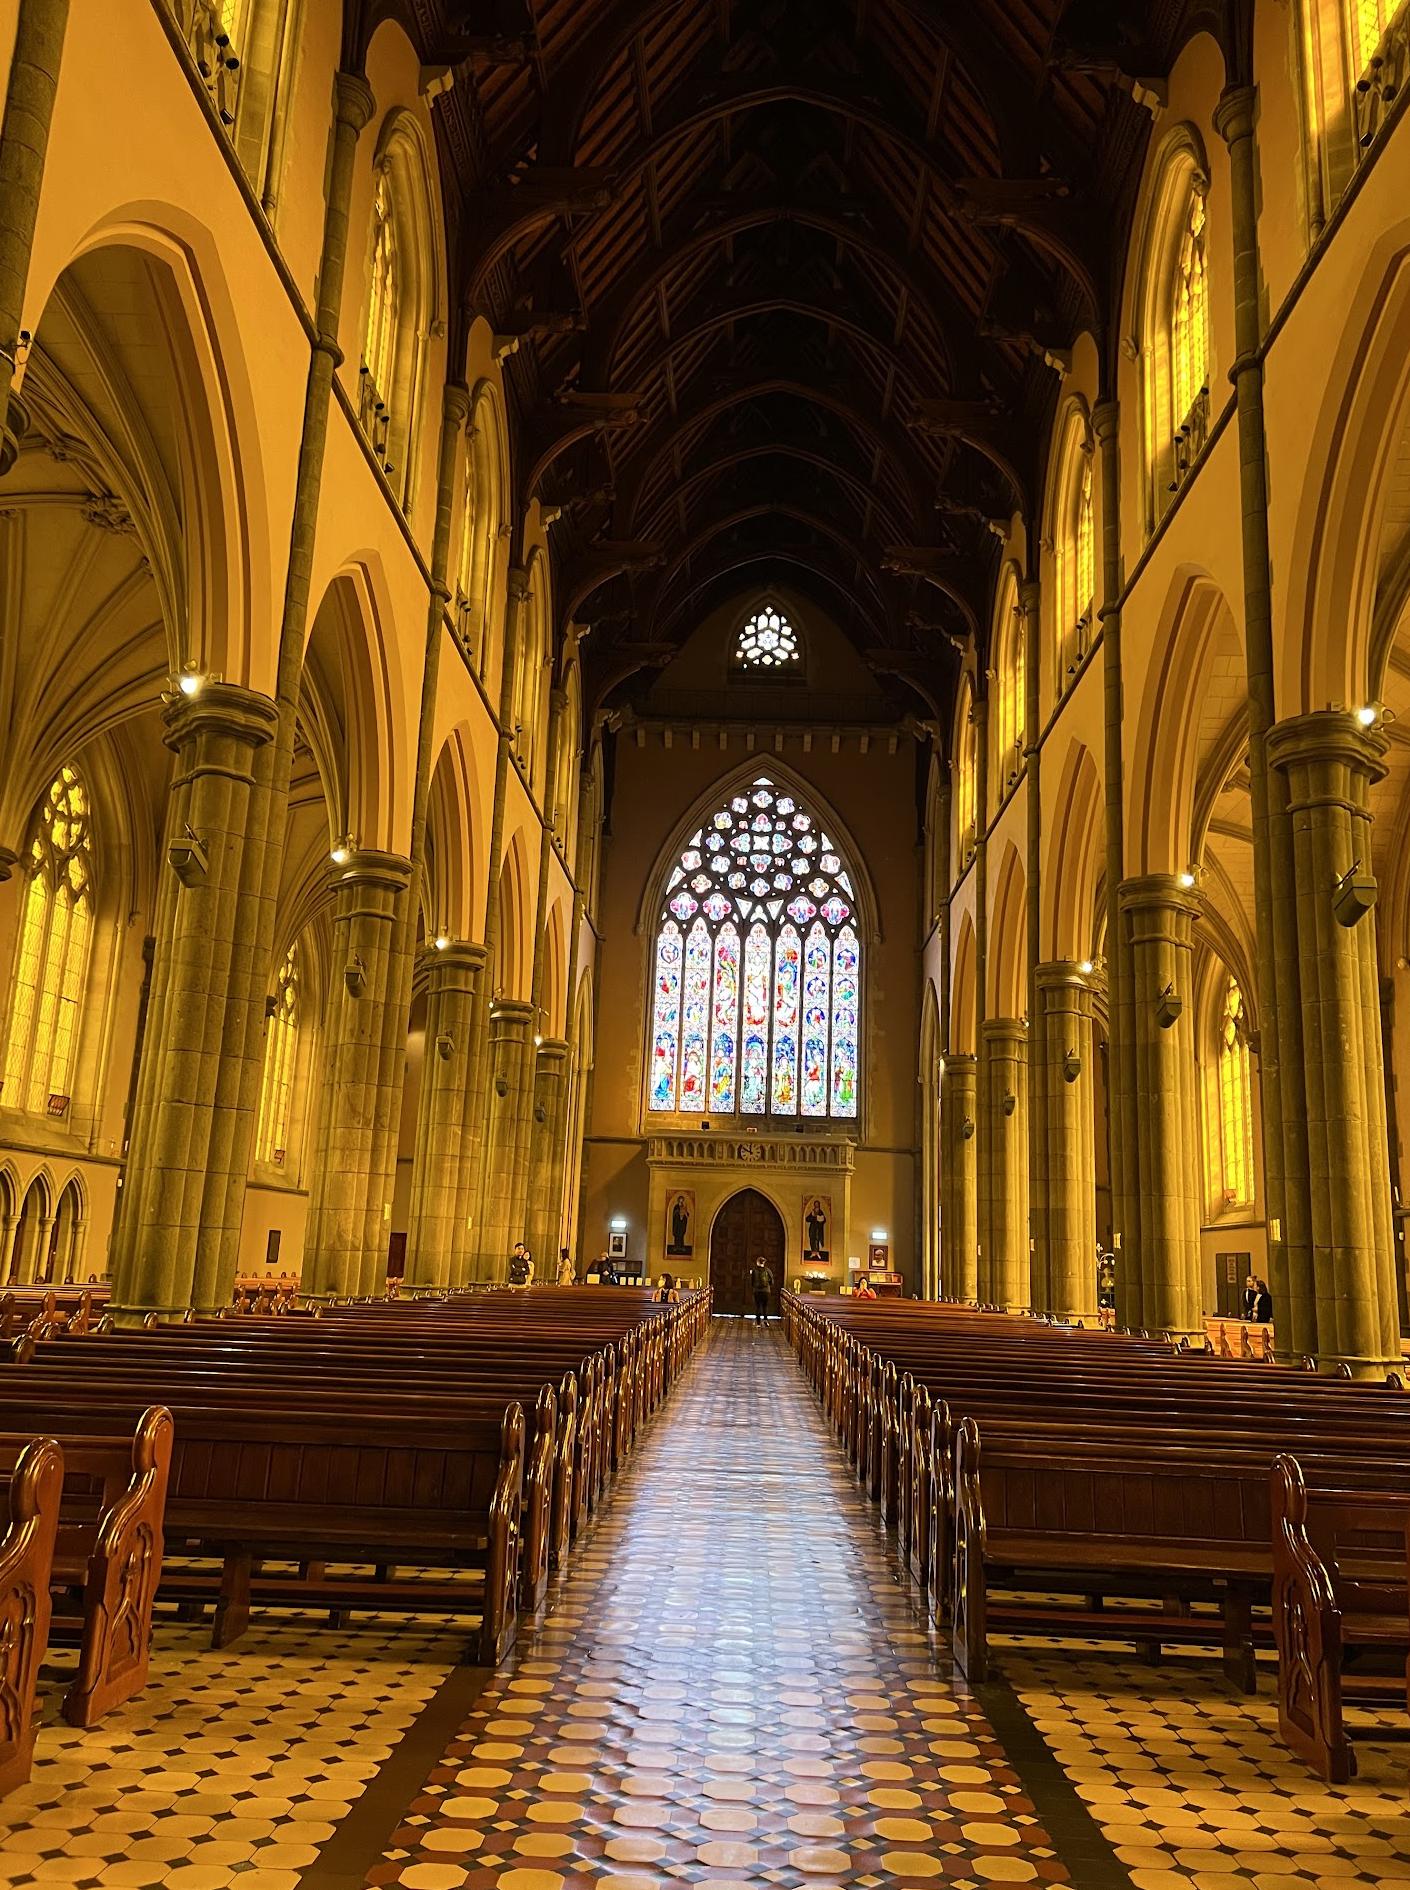 St. Patrick's kathedraal